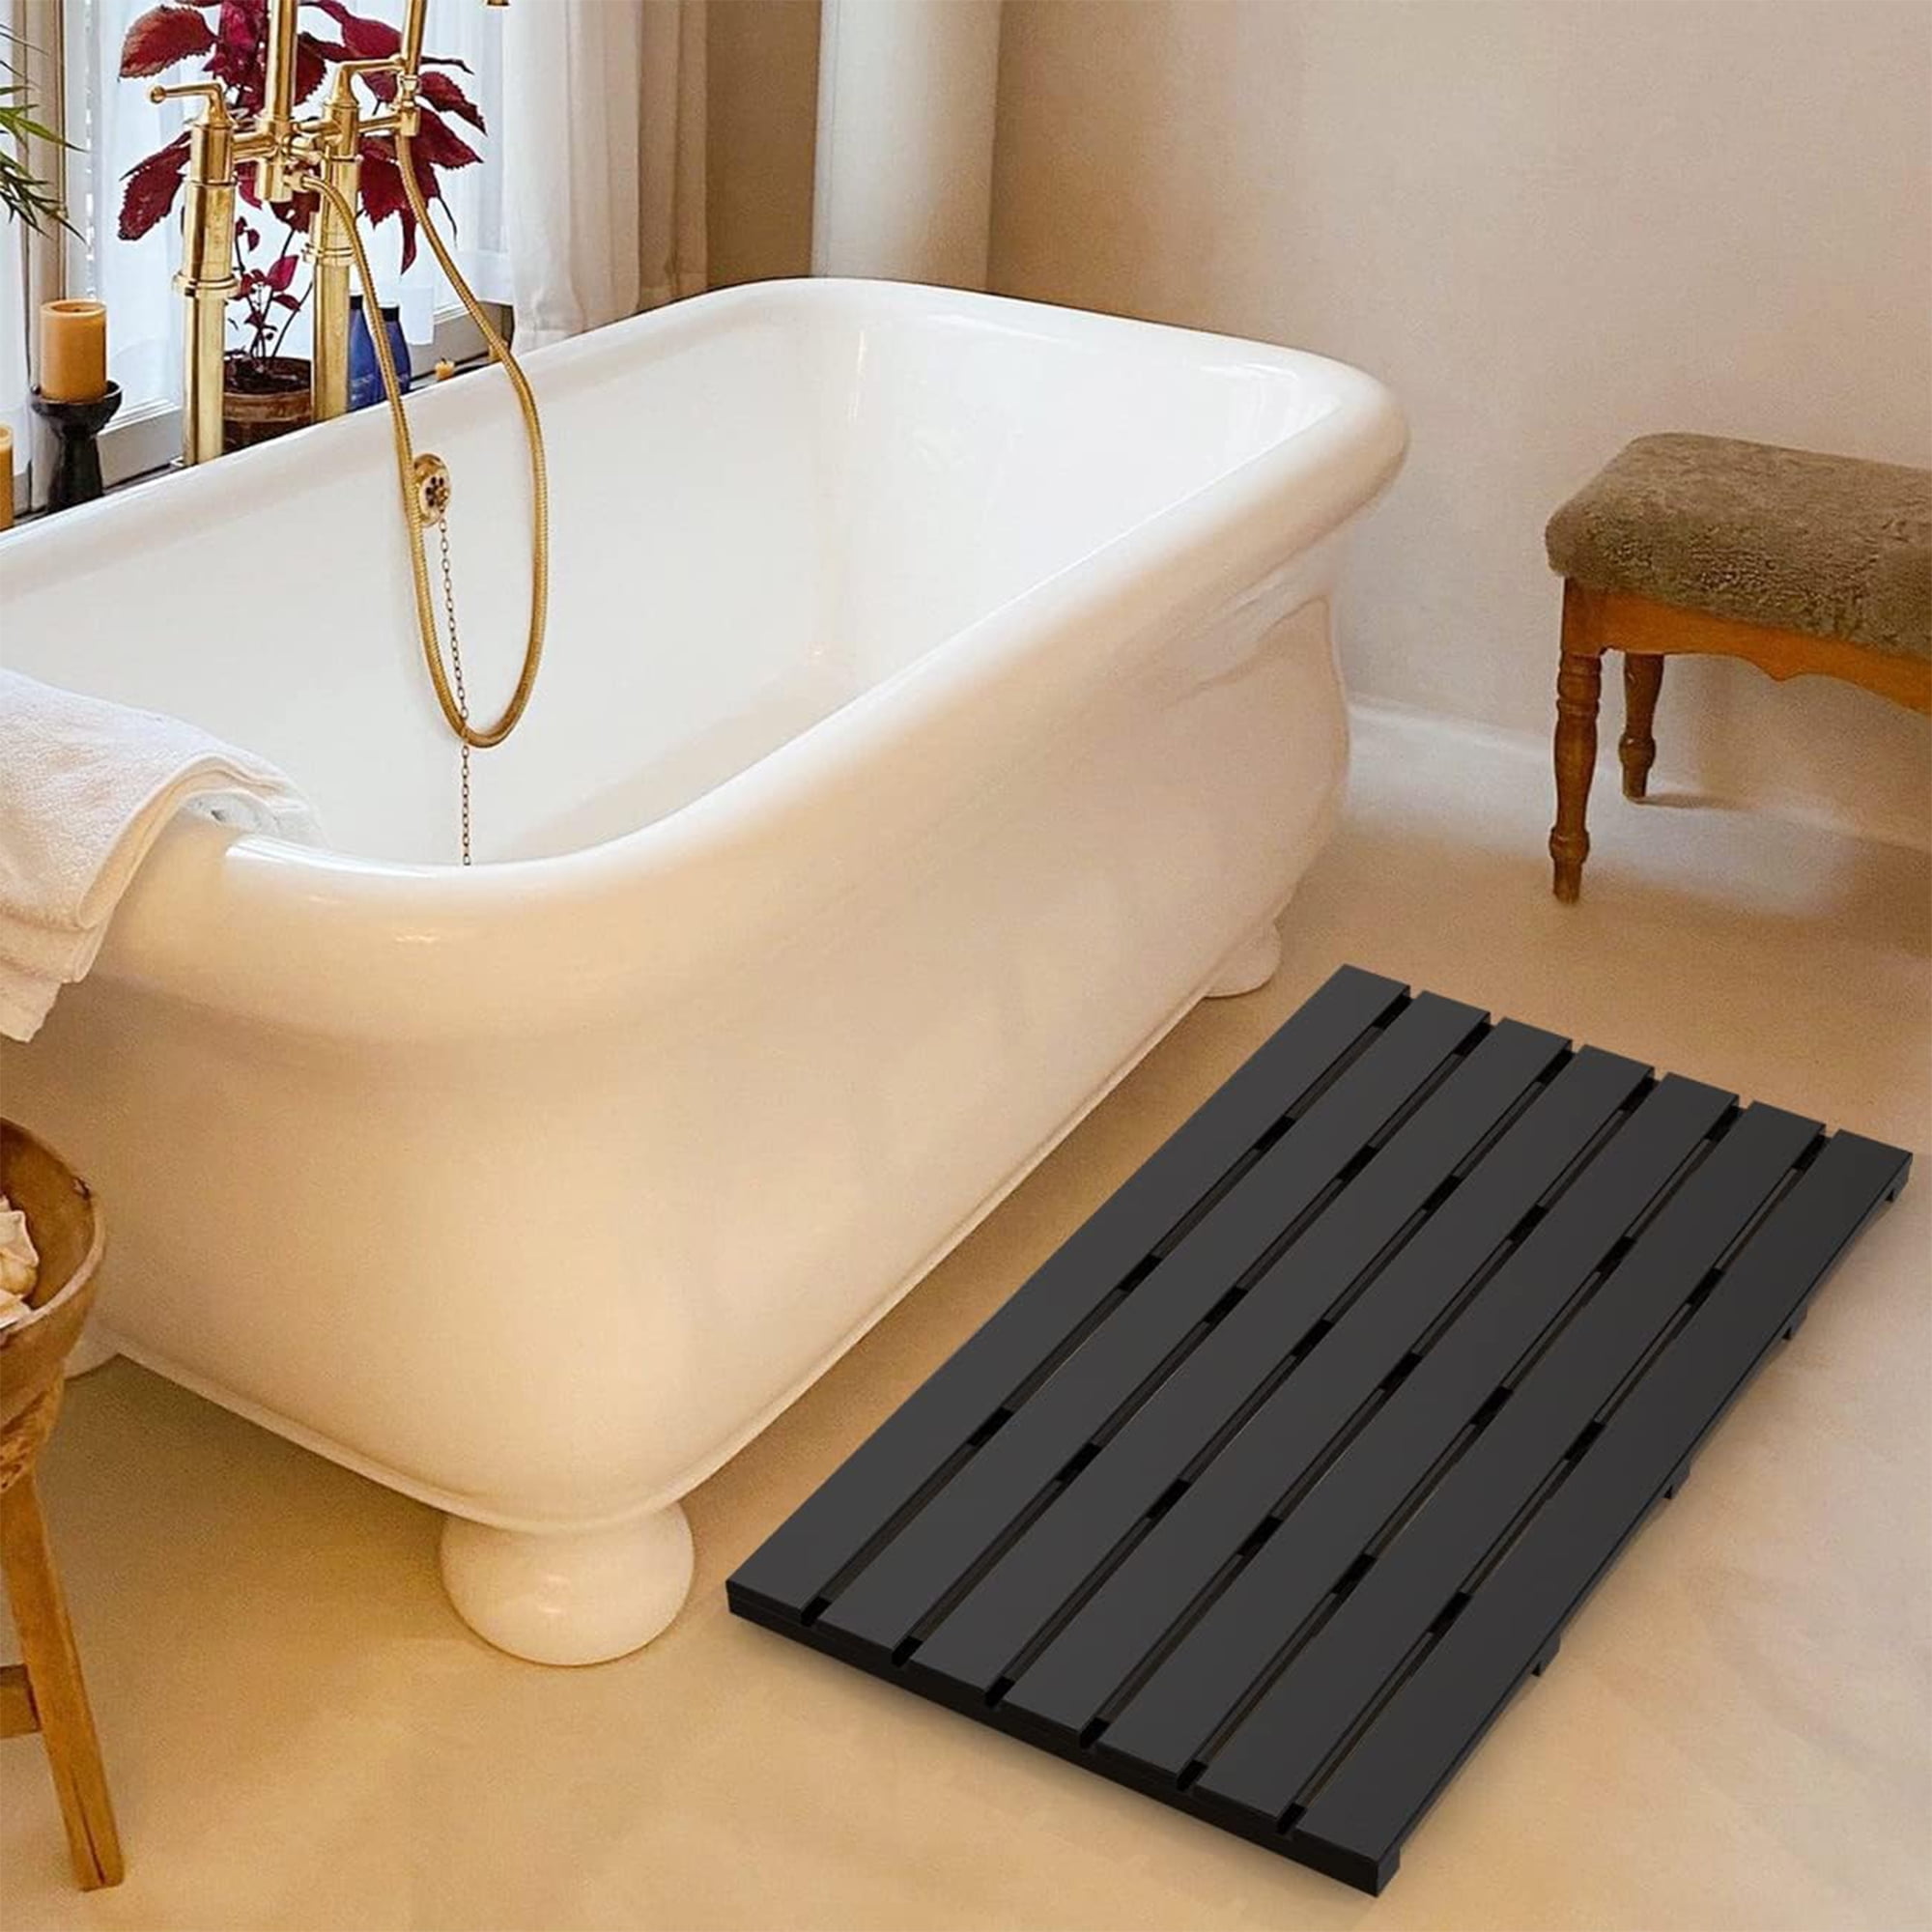 Bamboo Bath Mat Bathroom Runner Long Large Rugs Floor Wood Shower Bathtub  Waterproof Non Slip Accessories 16x48 Inch Easy to Clean, Brown, 1 pc